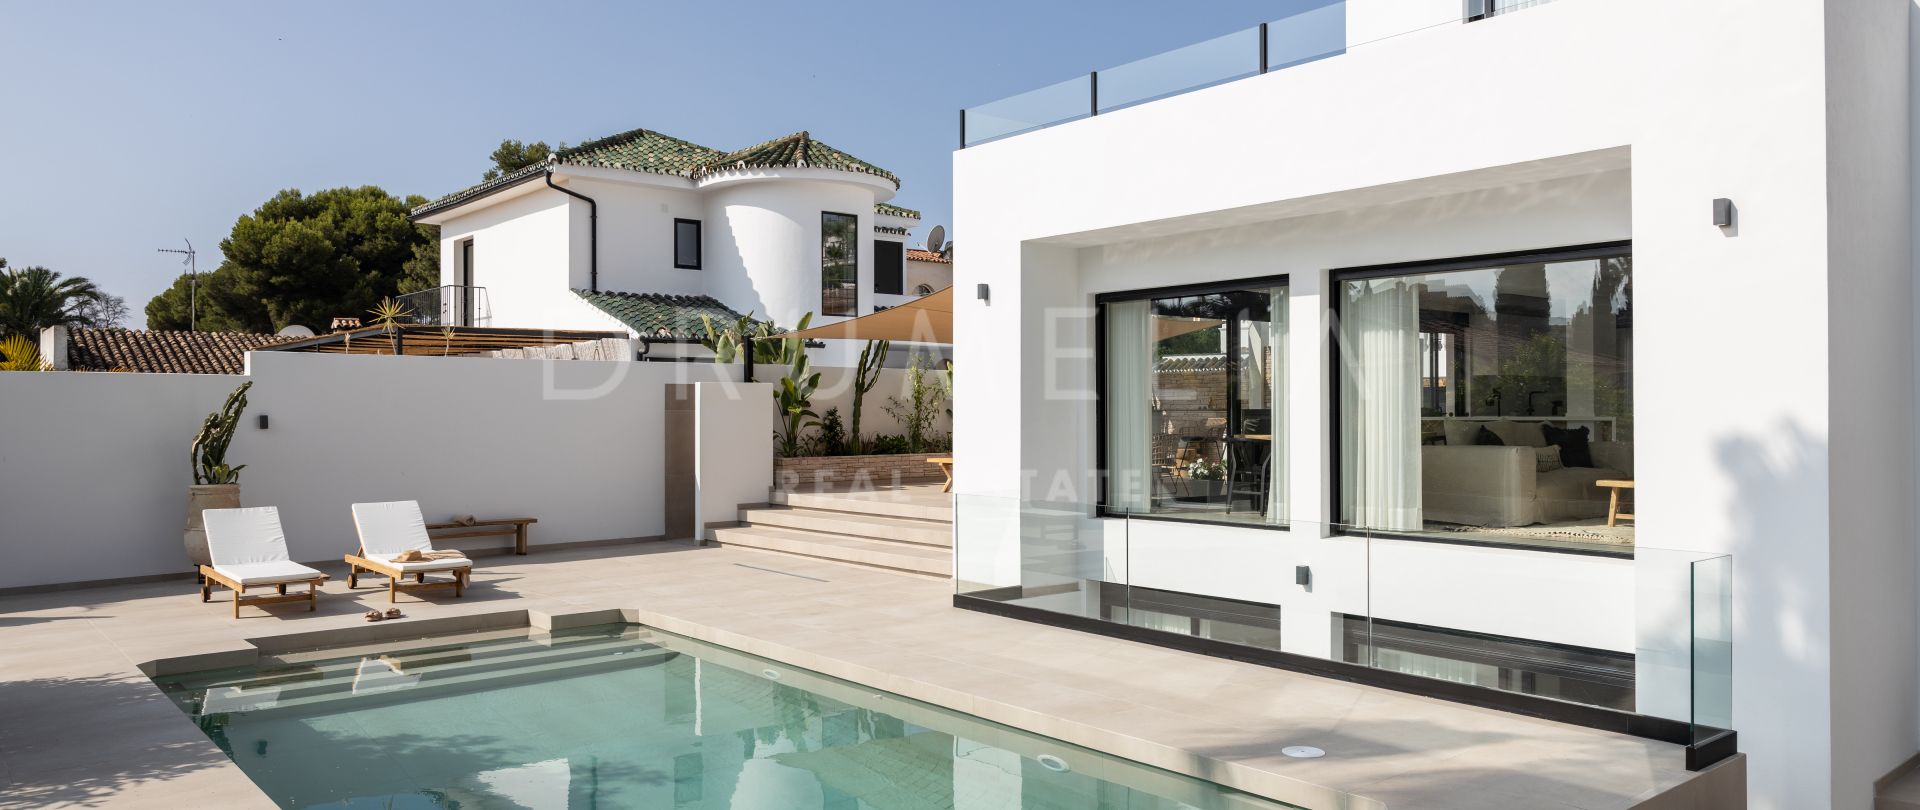 Stylish, fully refurbished modern luxury villa in Nueva Andalucía, walking distance to Puerto Banus